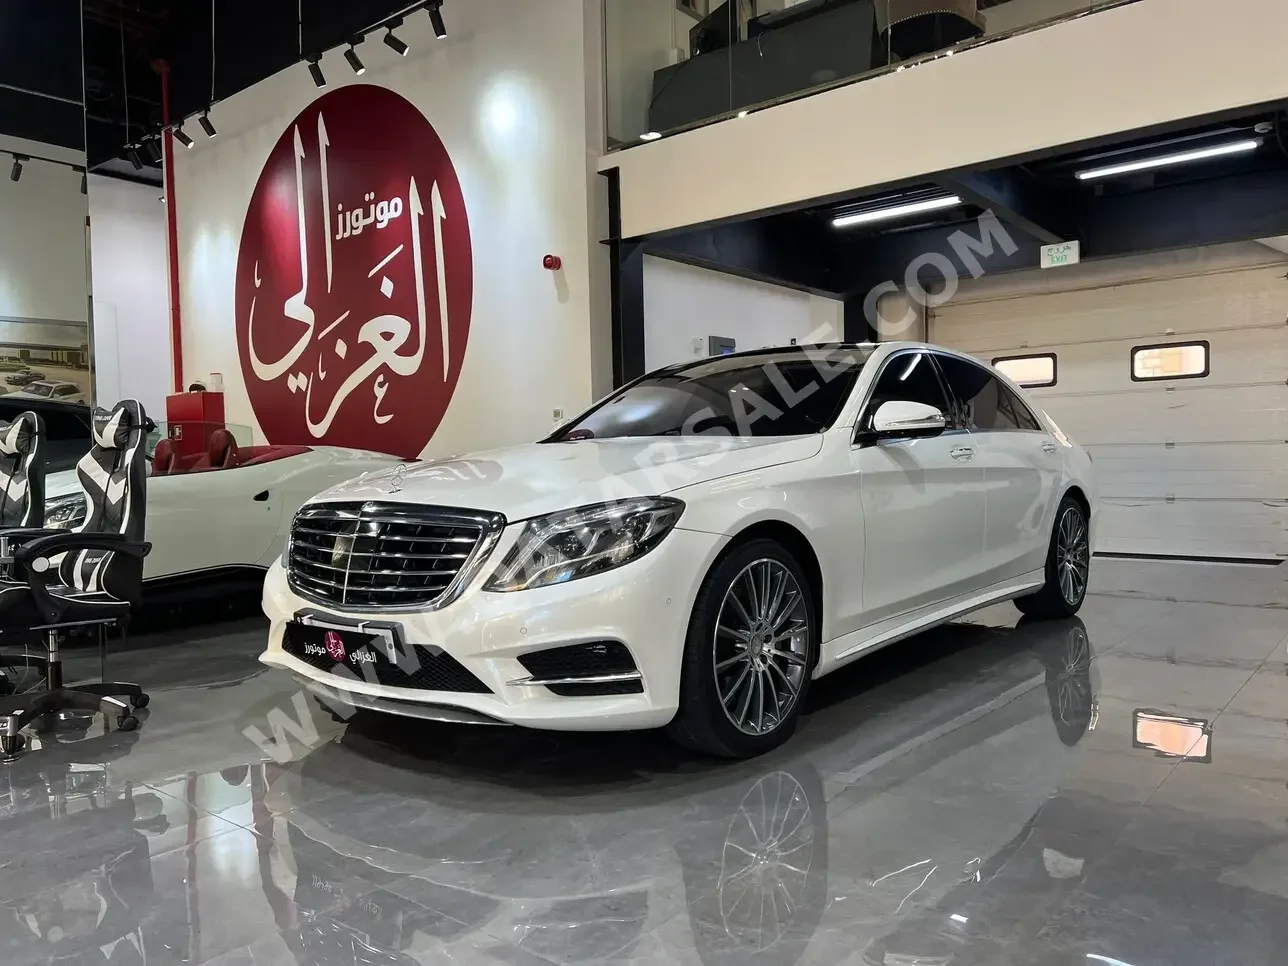 Mercedes-Benz  S-Class  500  2015  Automatic  66,000 Km  8 Cylinder  Rear Wheel Drive (RWD)  Sedan  White